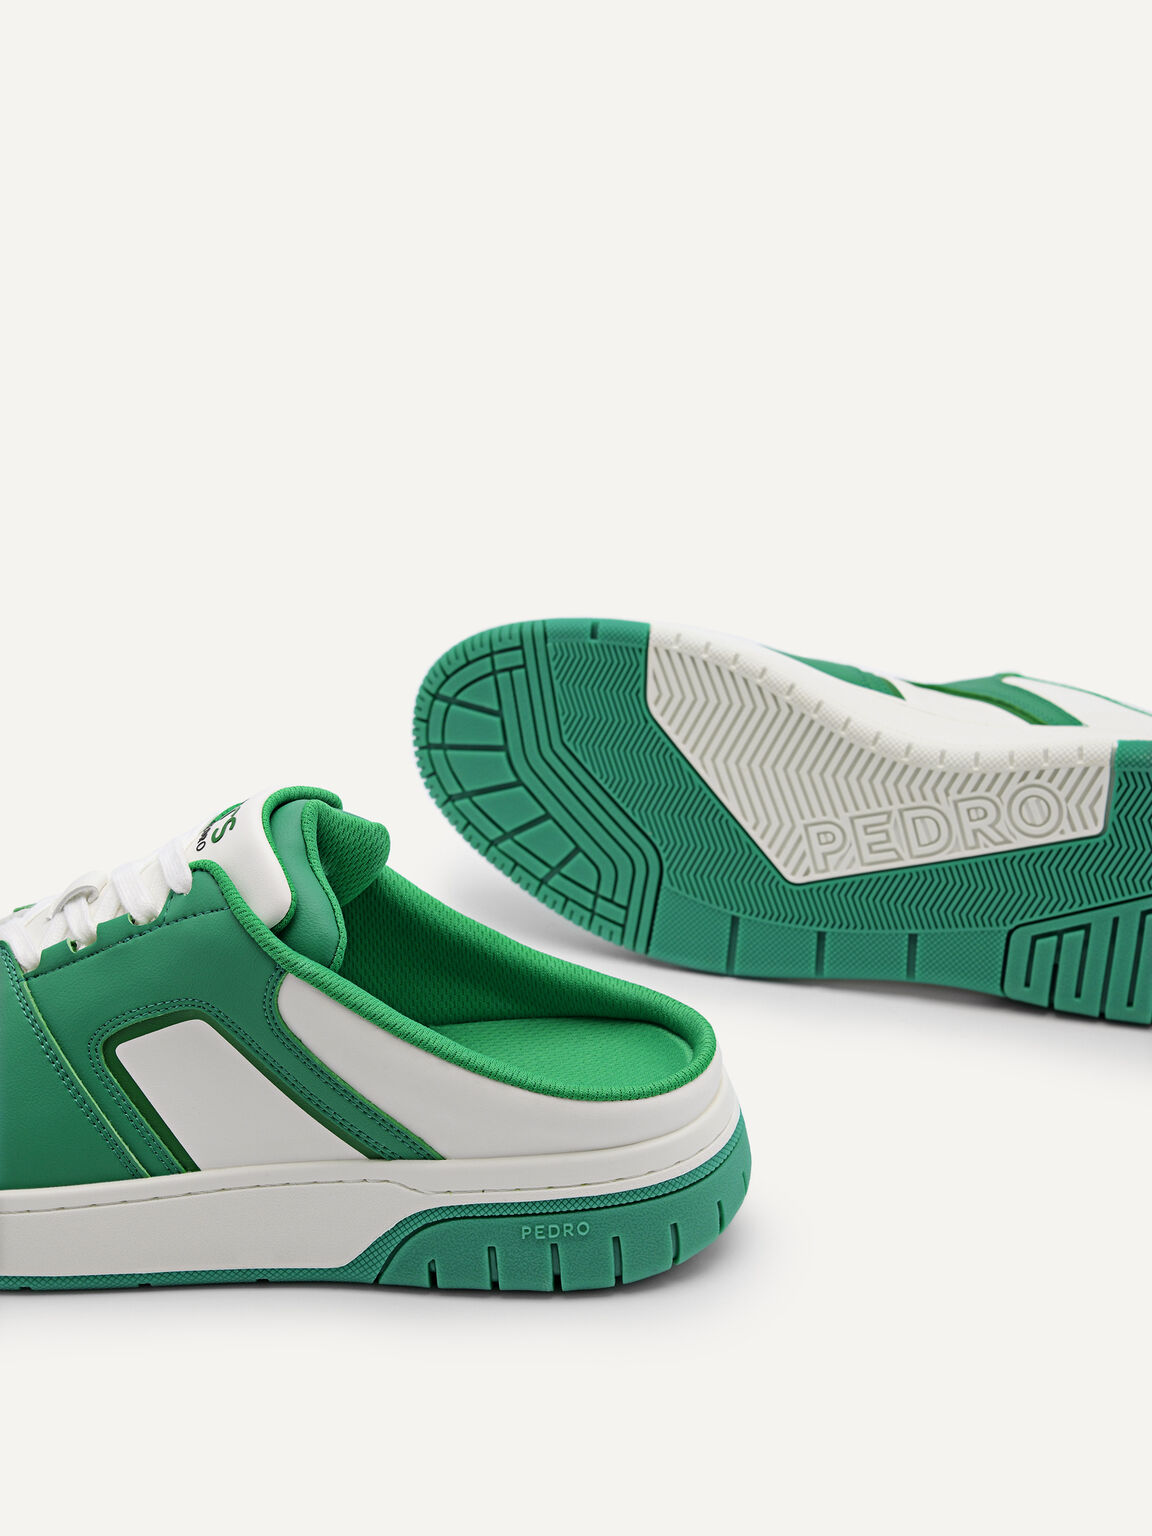 Men's EOS Slip-On Sneakers, Green, hi-res